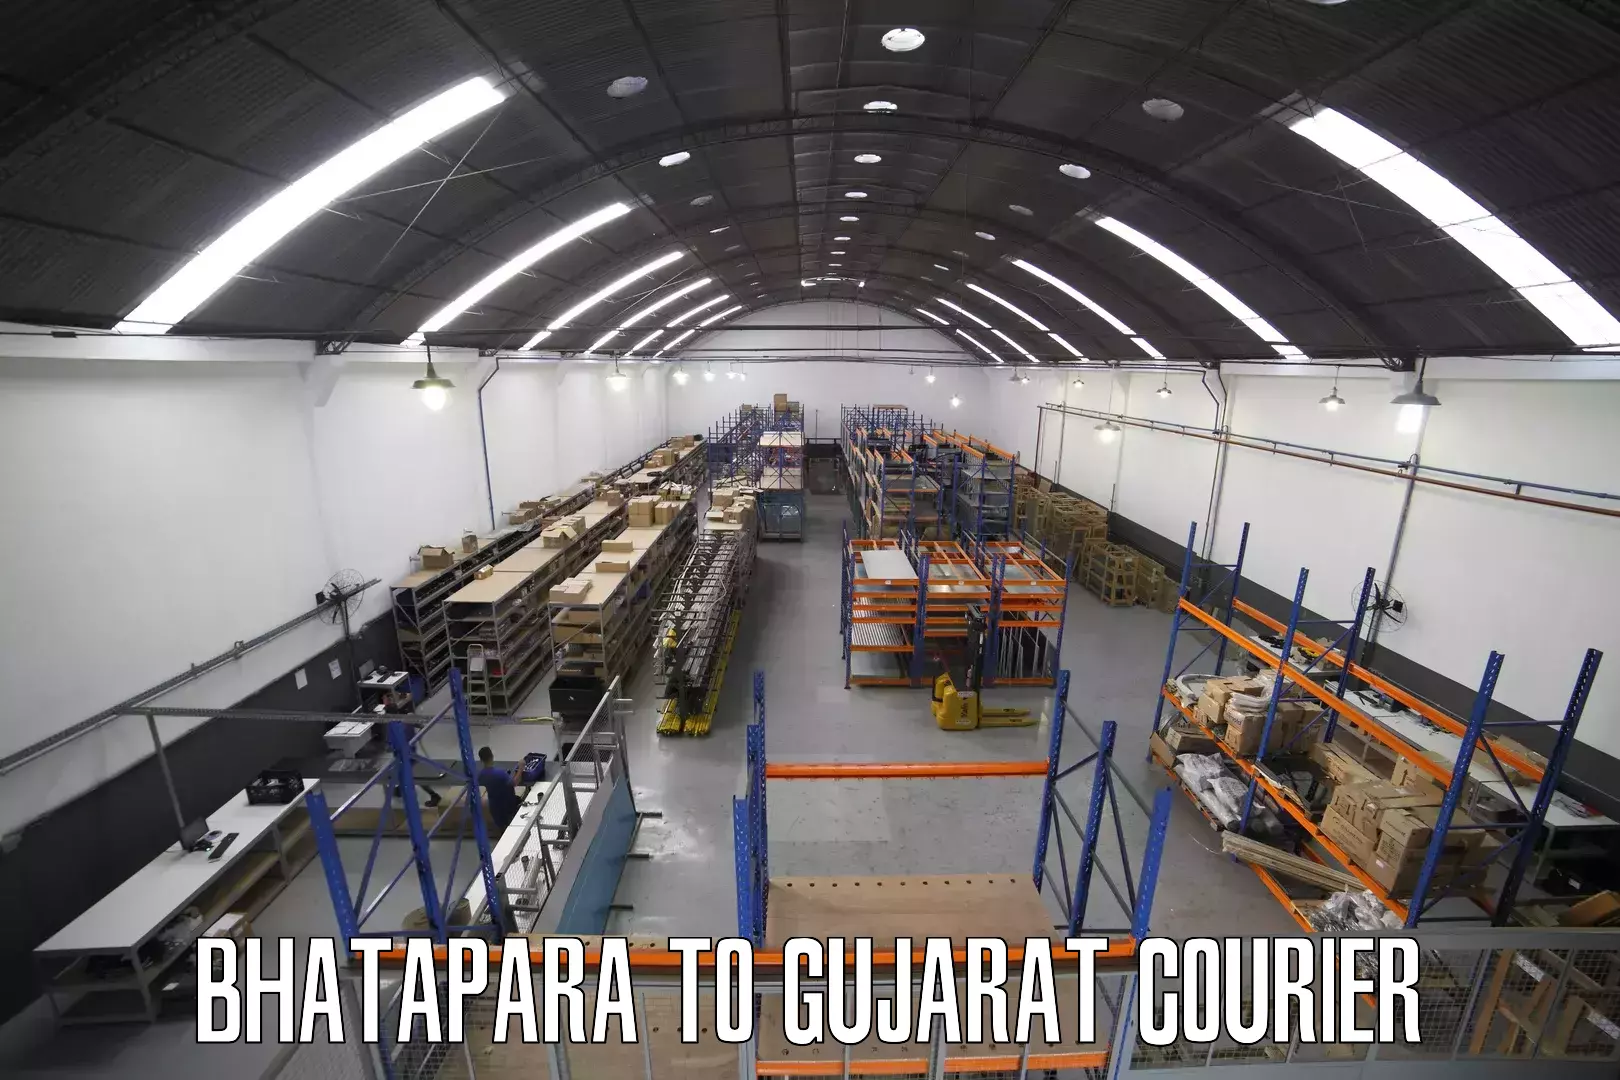 Global logistics network Bhatapara to Dediapada